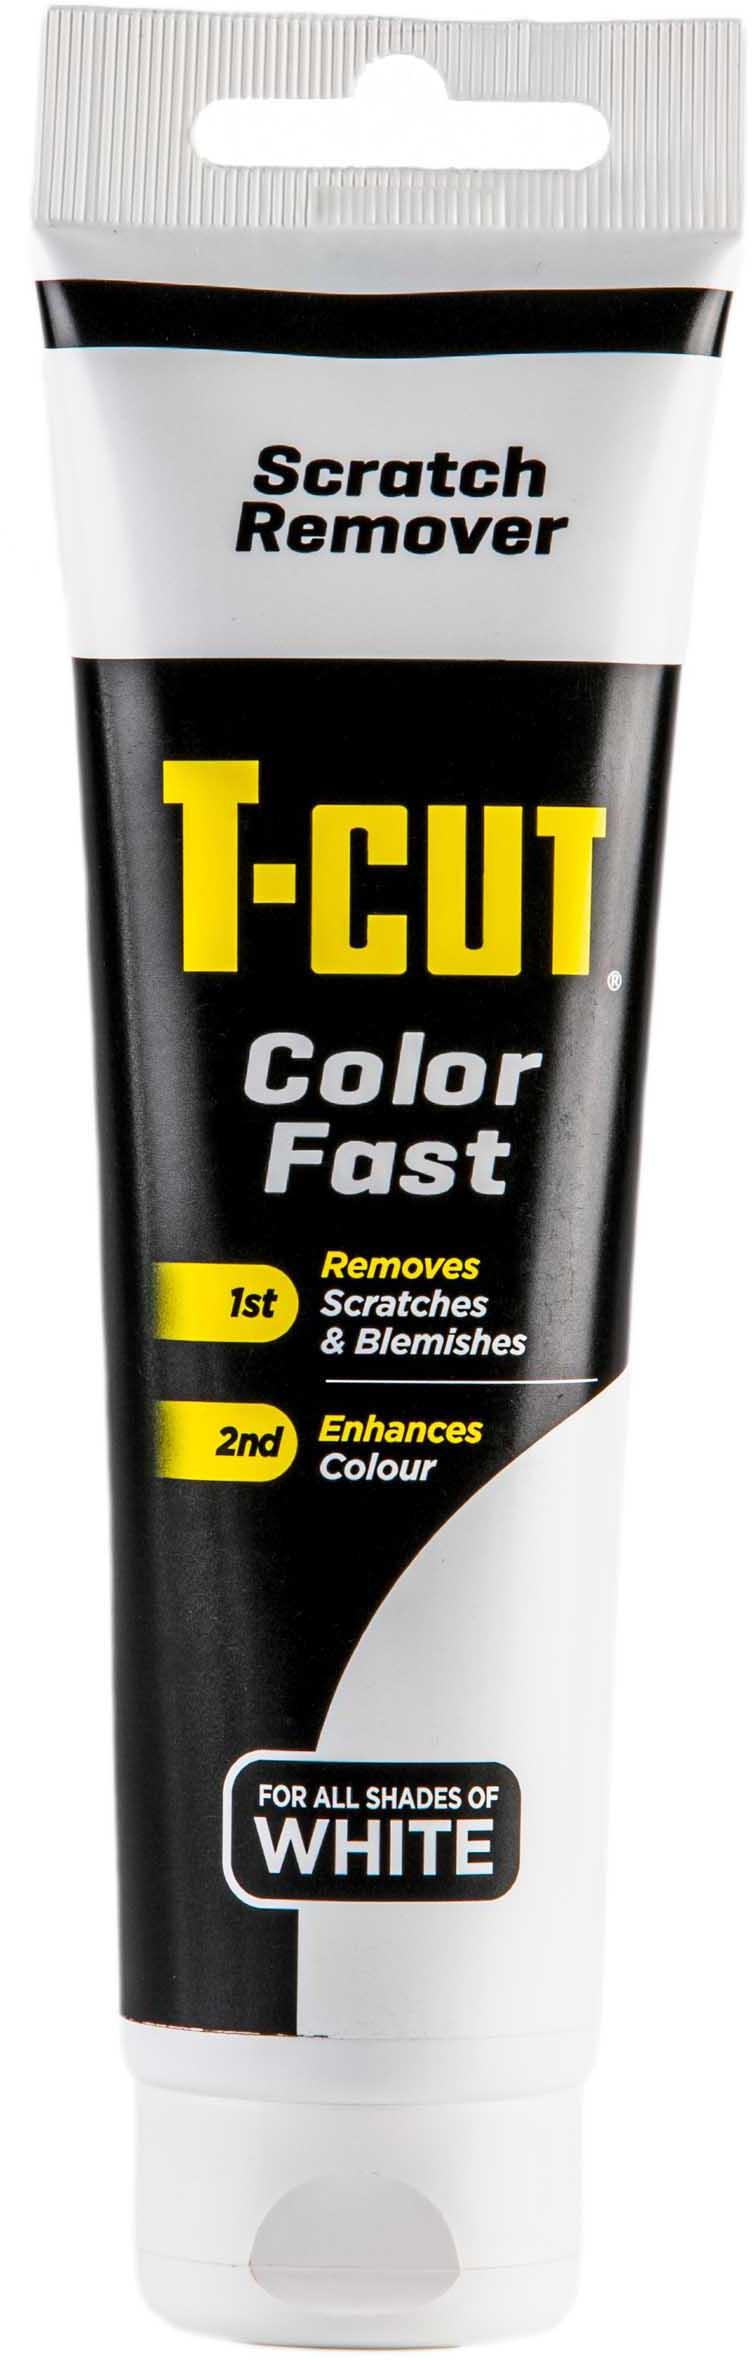 T-Cut Colour Fast Scratch Remover - White